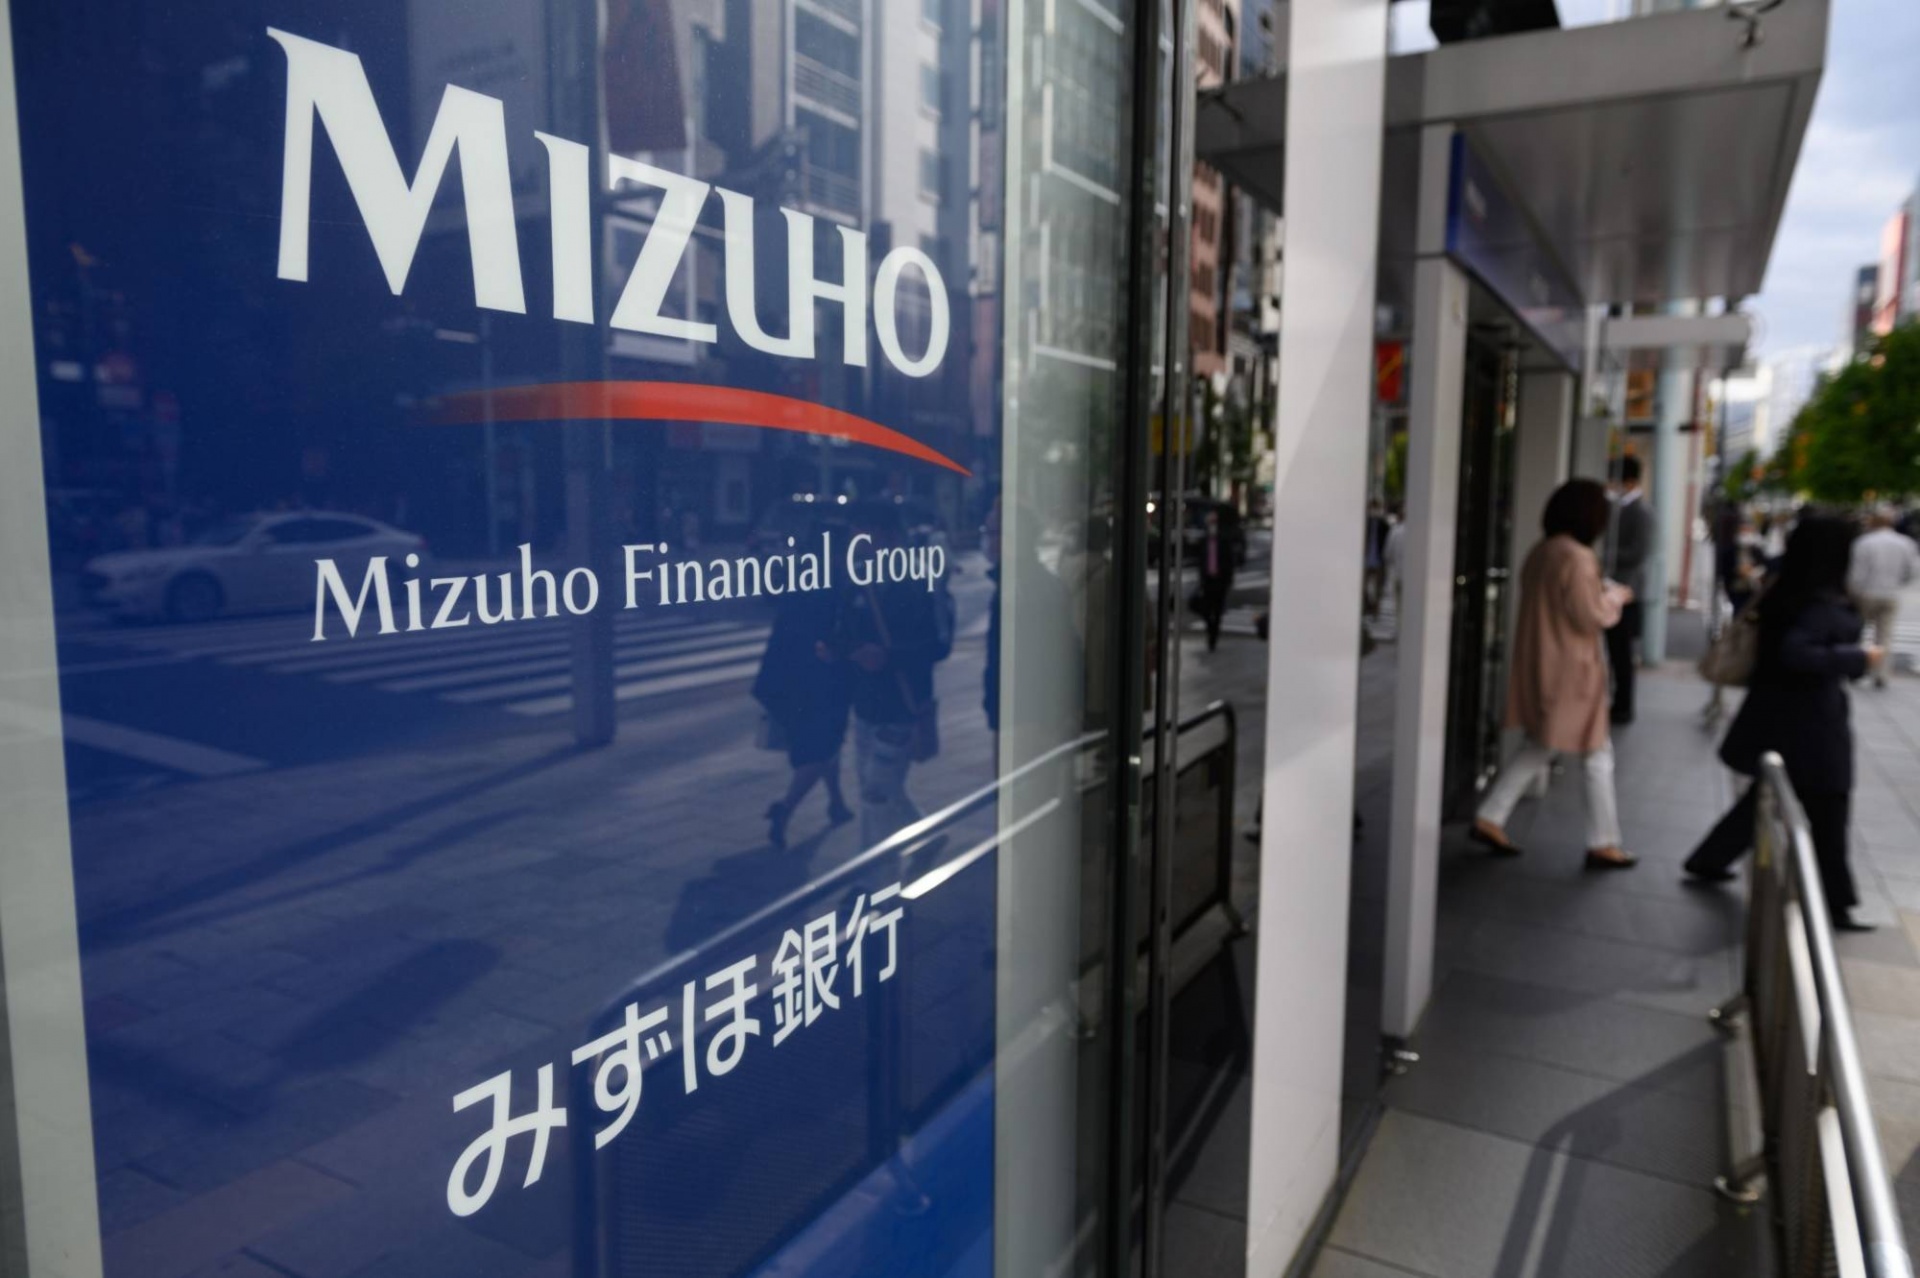 Mizuho secures a 15 per cent stake in Kisetsu Saison